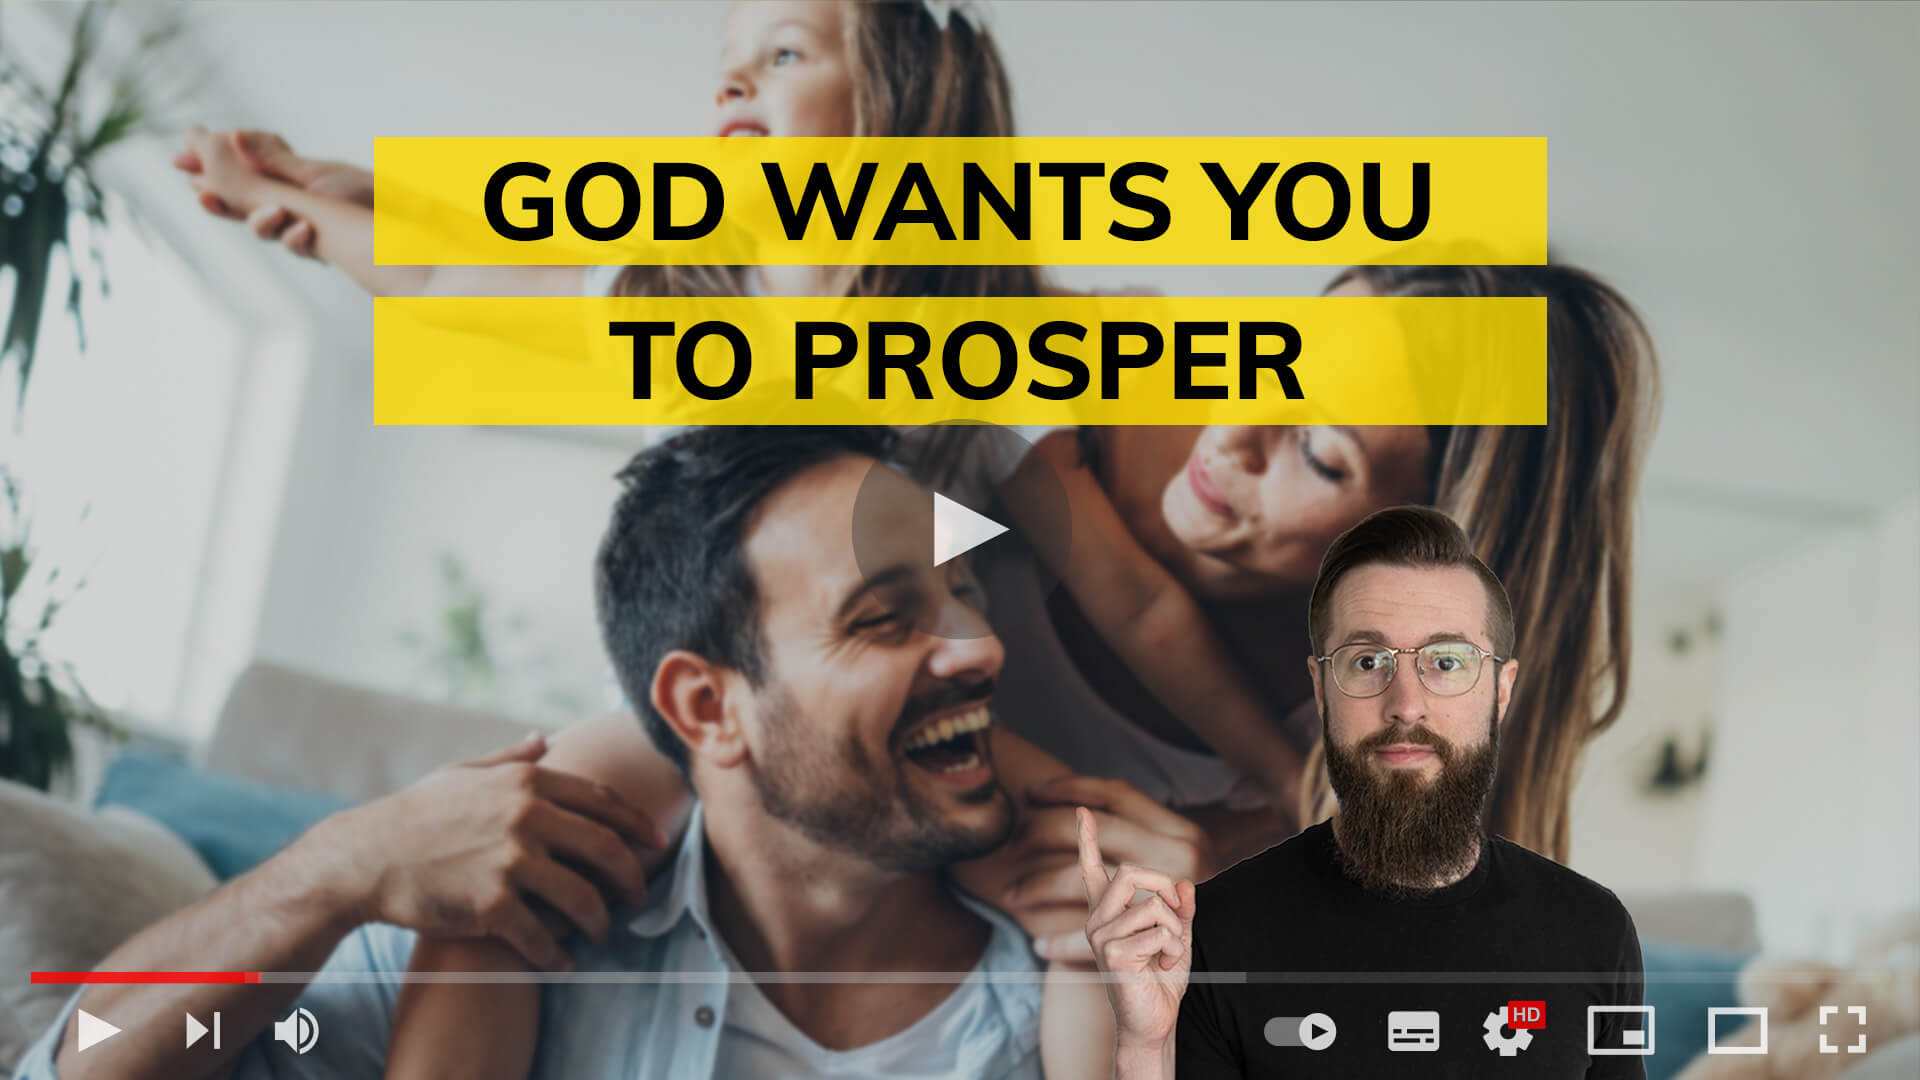 God wants YOU to prosper